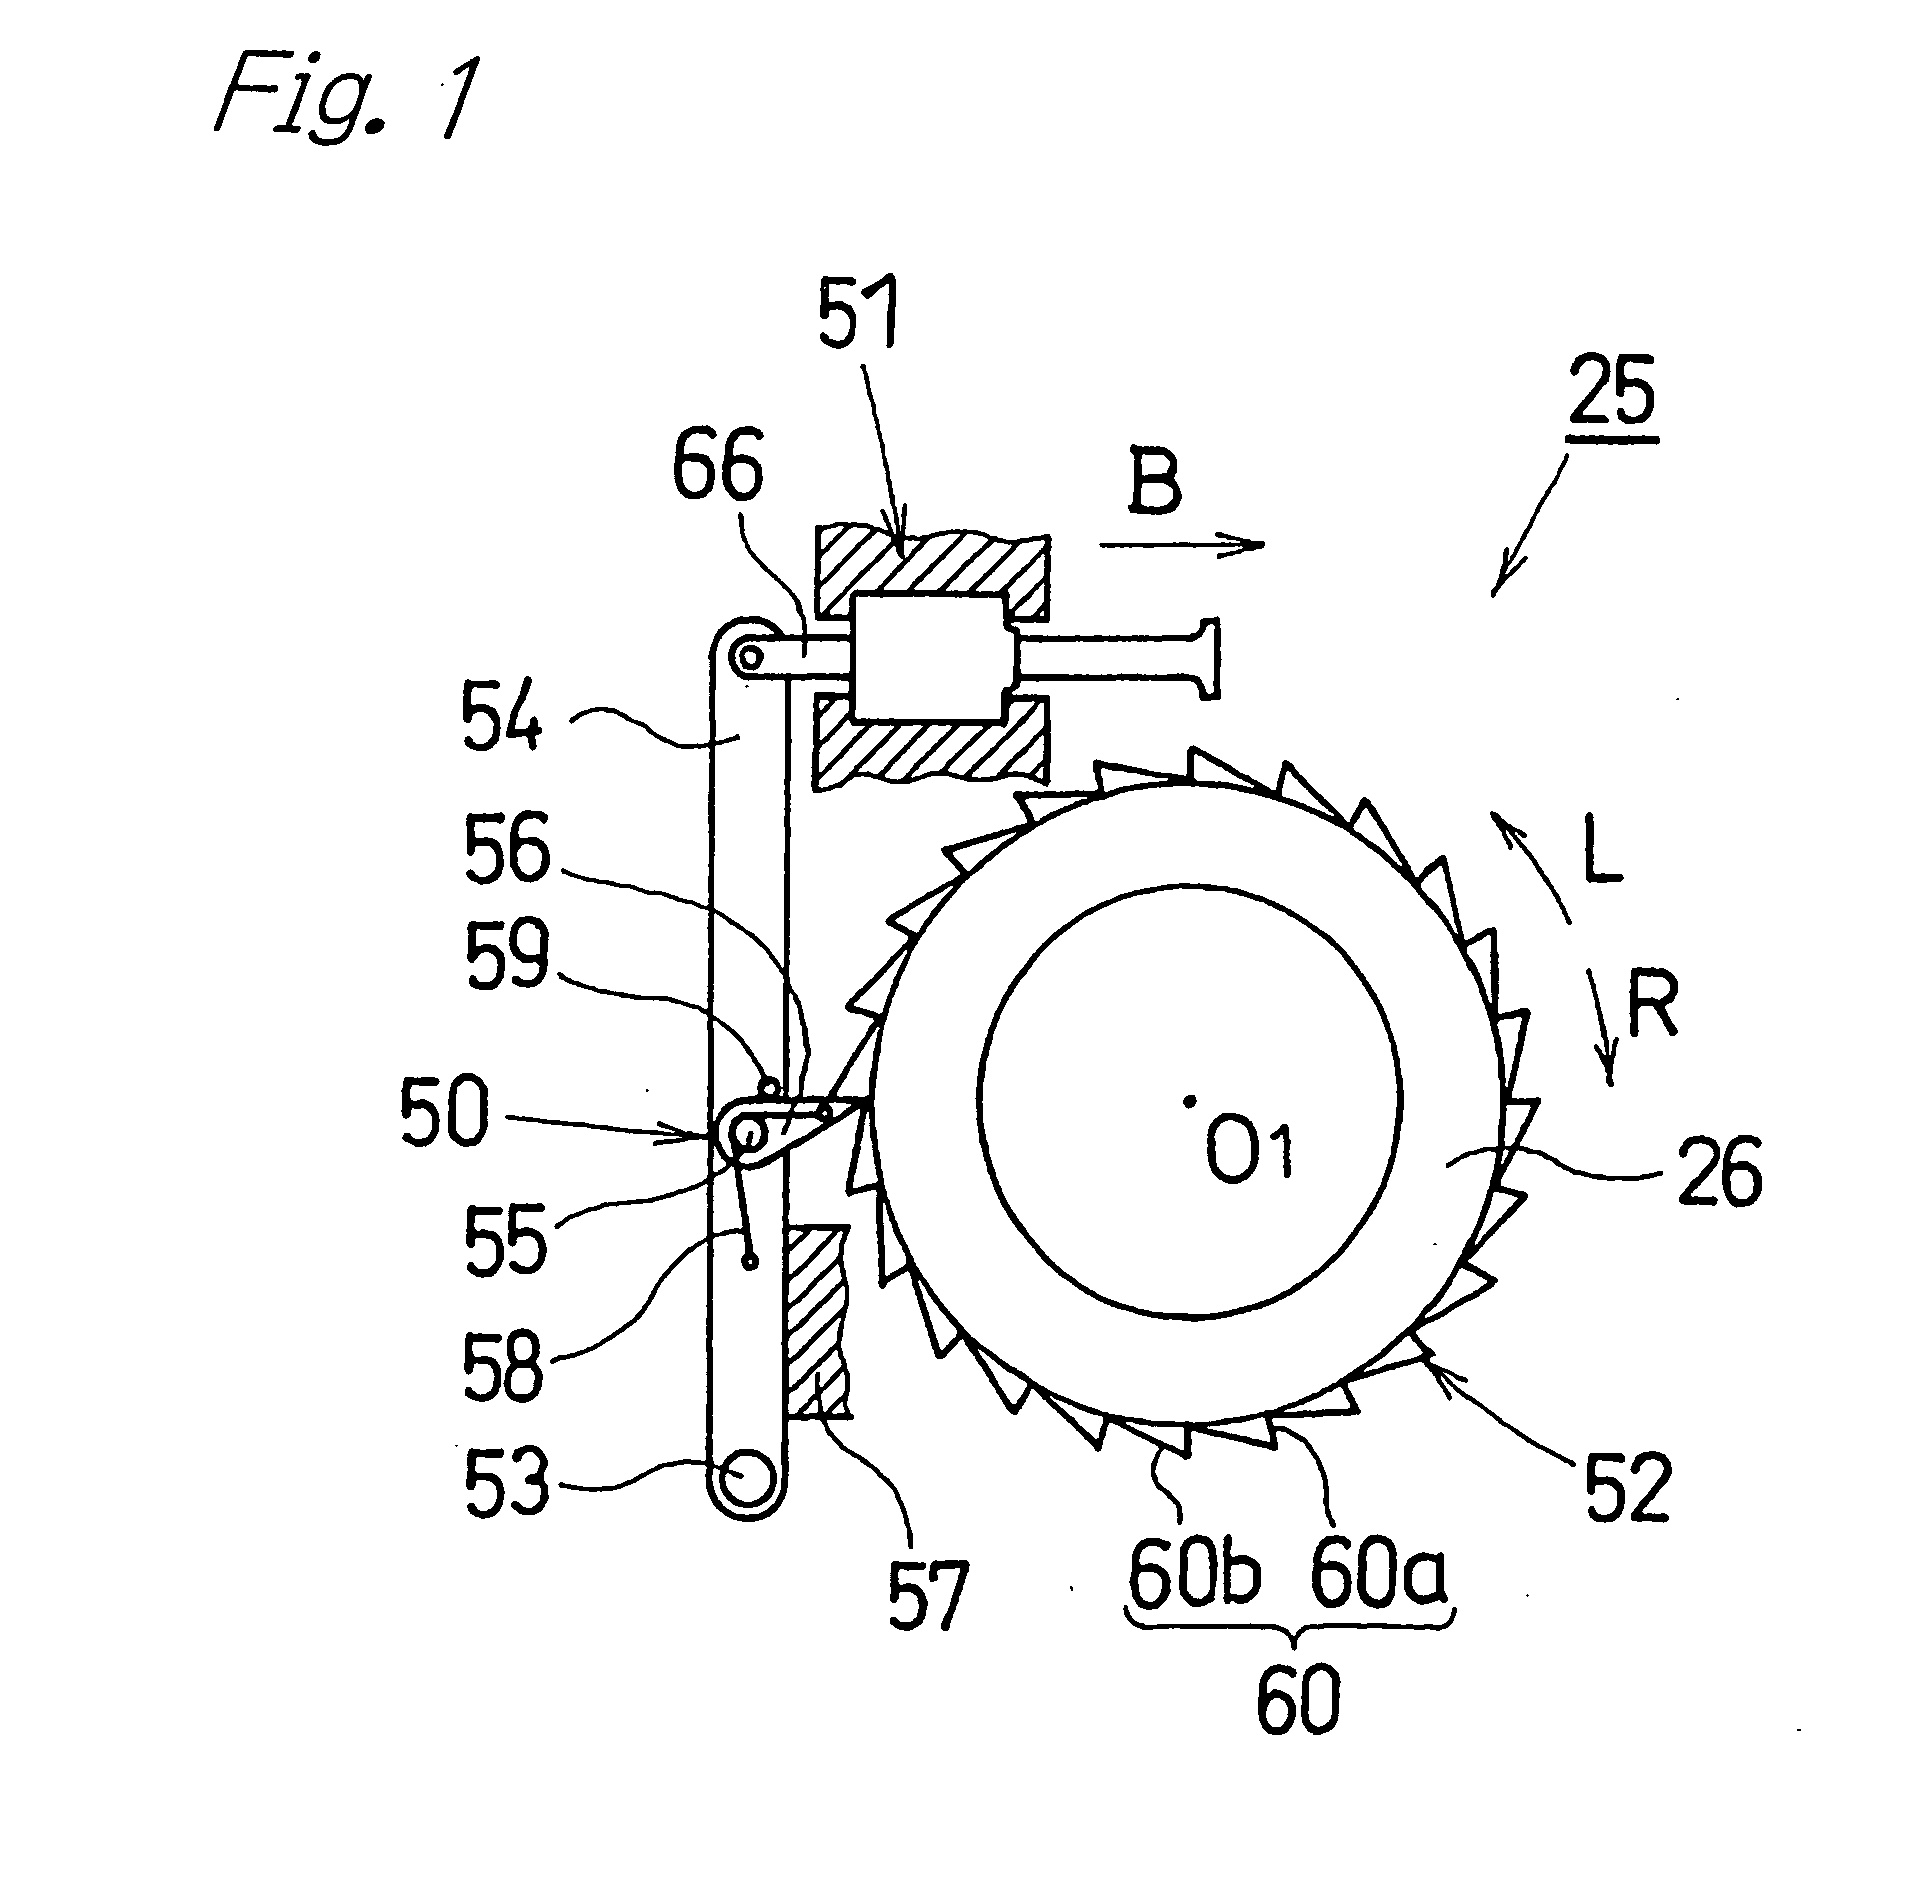 Motor-driven disk brake system